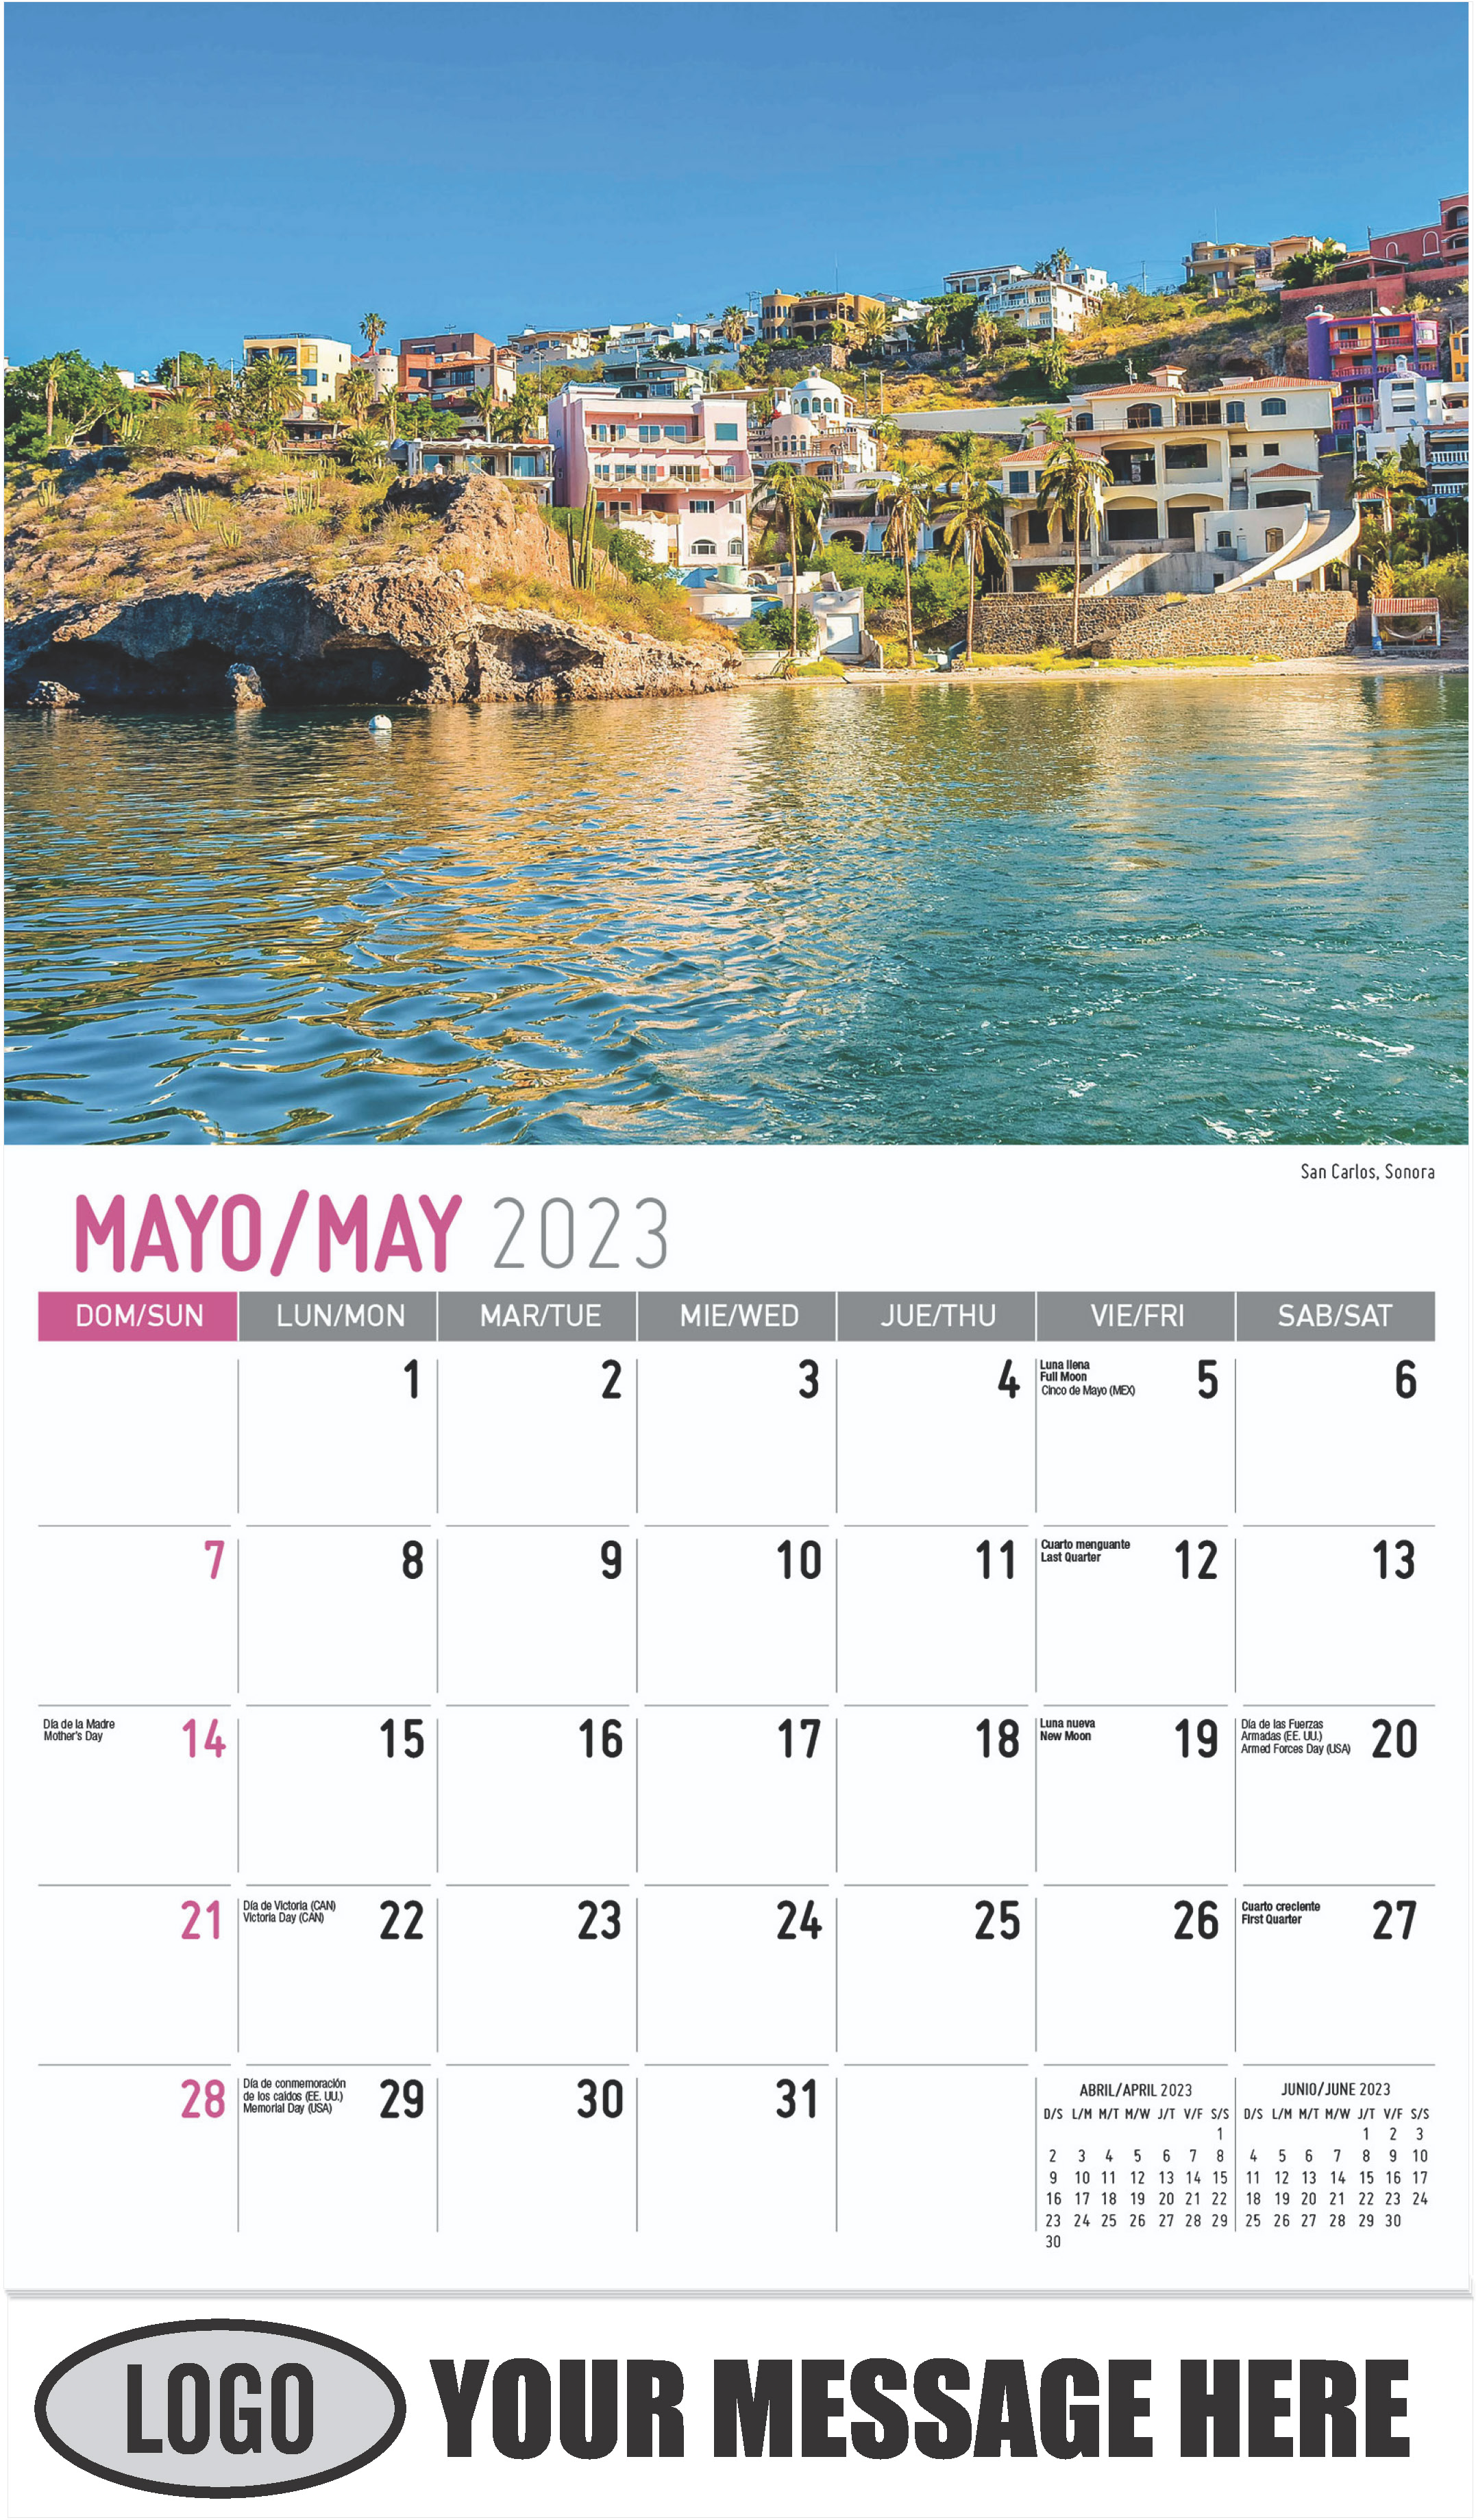 San Carlos, Sonora - May - Scenes of Mexico (Spanish-English bilingual) 2023 Promotional Calendar